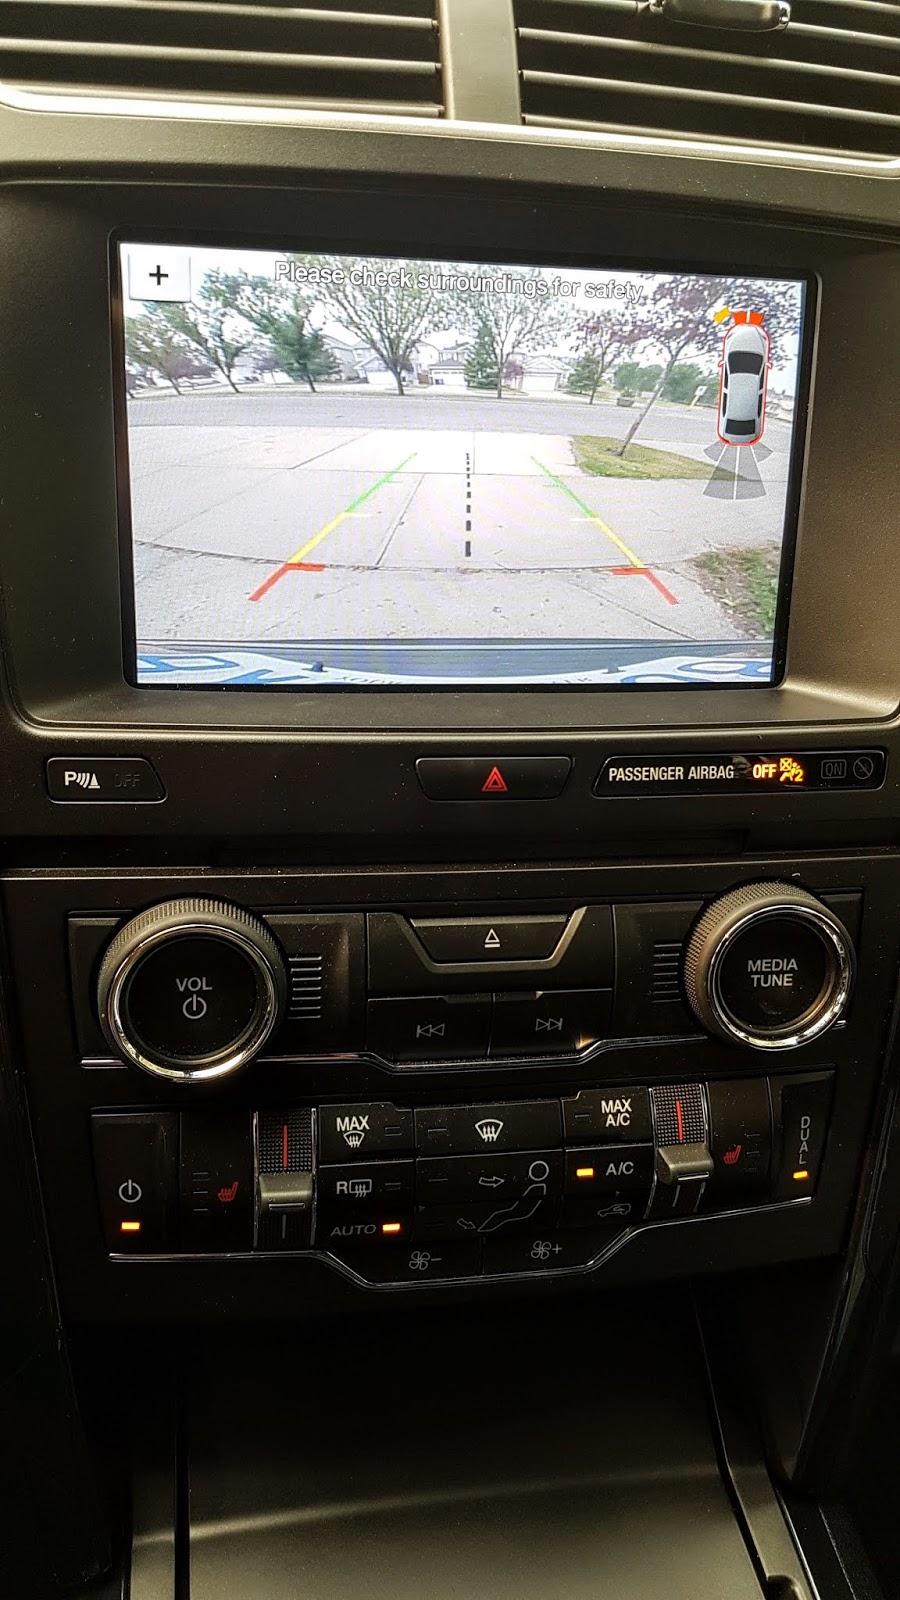 2018 Ford Explorer infotainment system